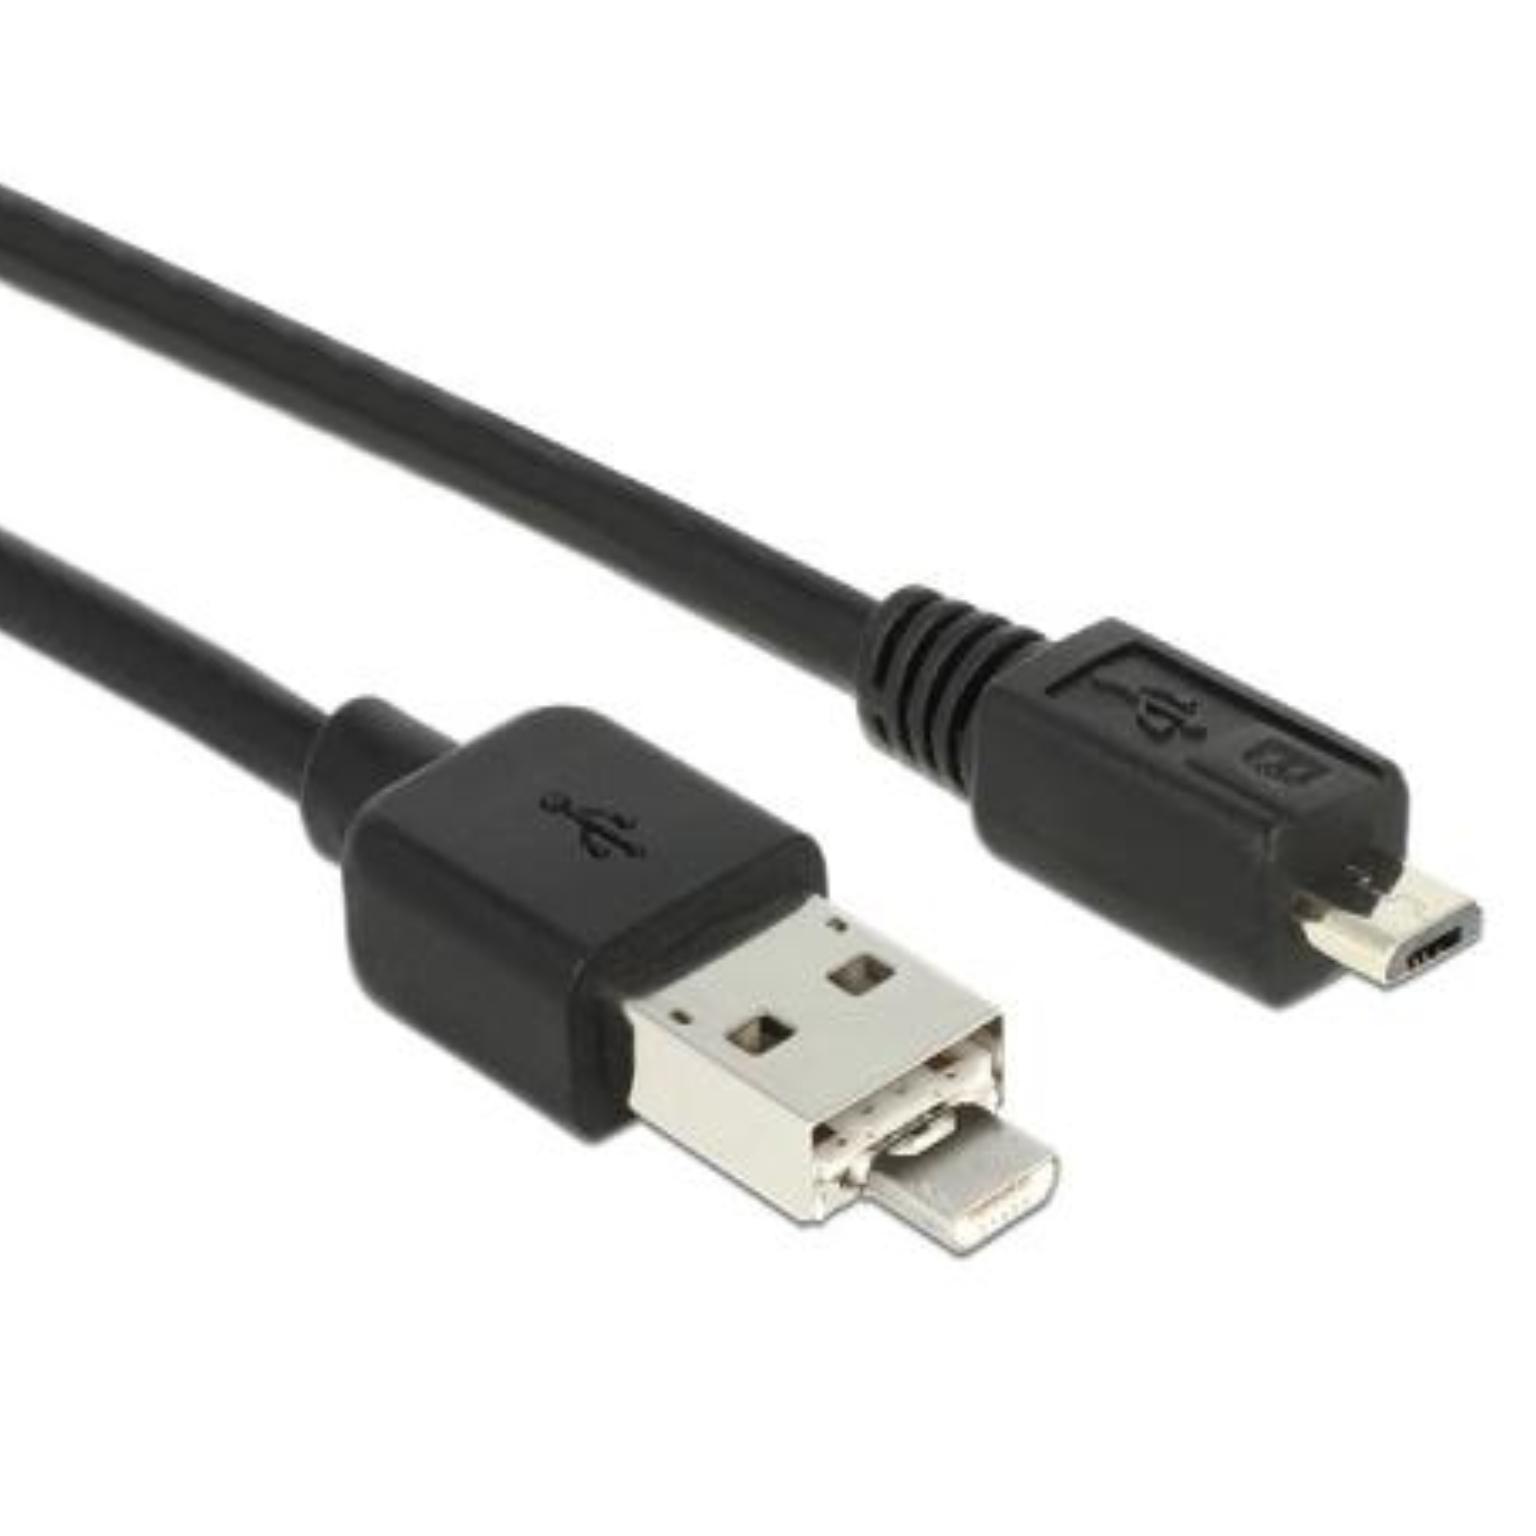 USB 2.0 micro kabel - Powersharing + OTG